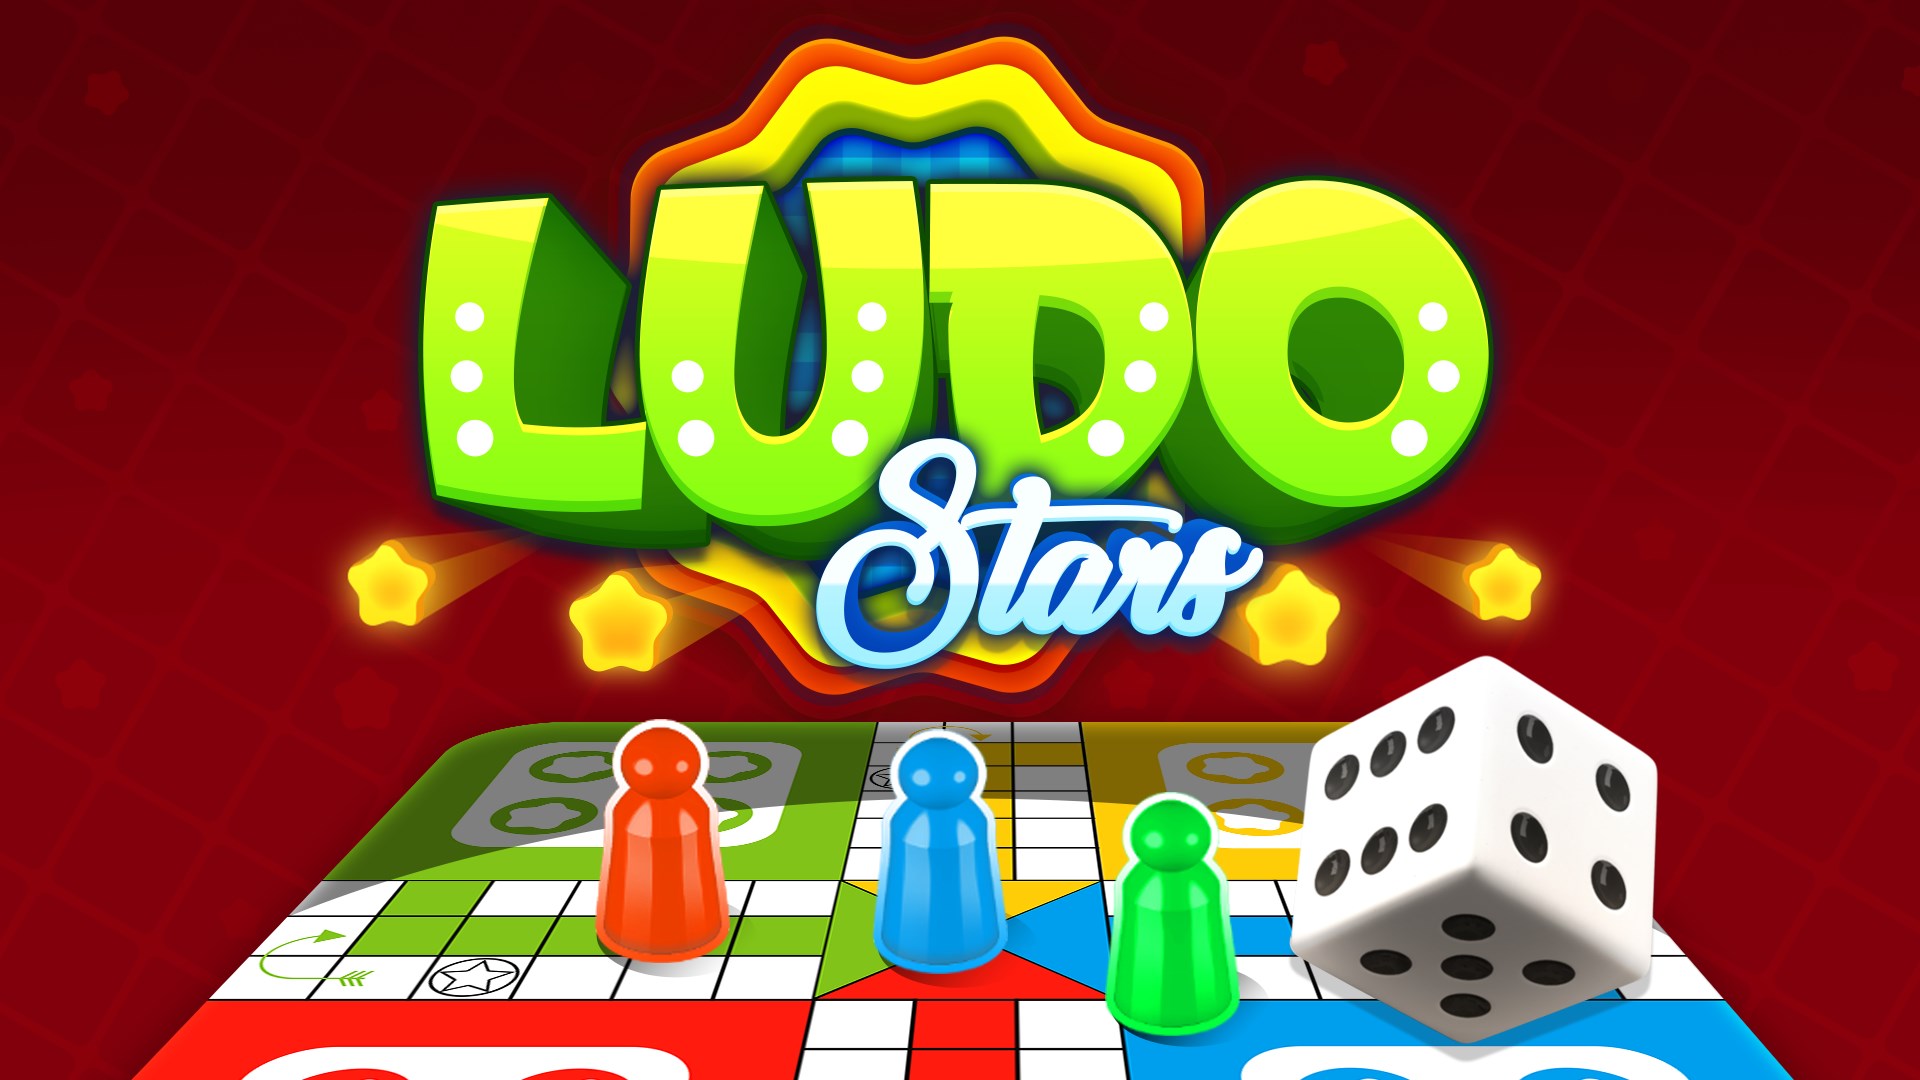 Ludo Hero - 2 - 4 Players Game on